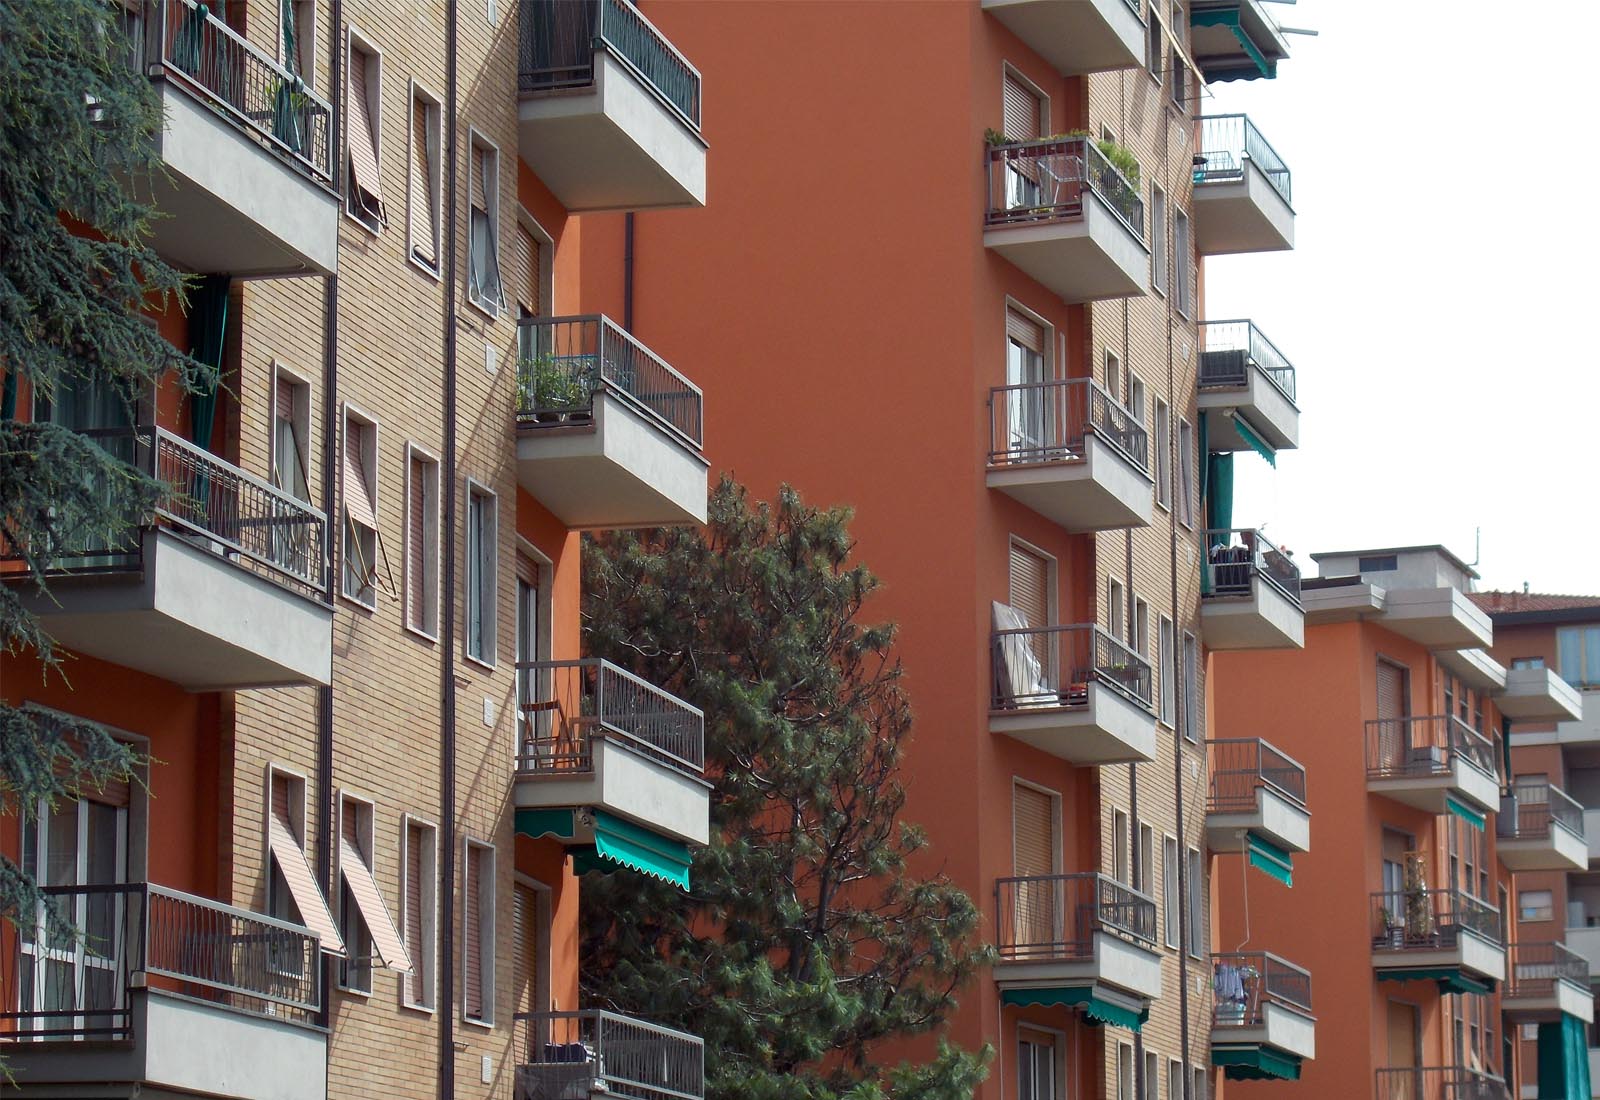 Residenze Val di Ledro - Le case 1, 3 e 5